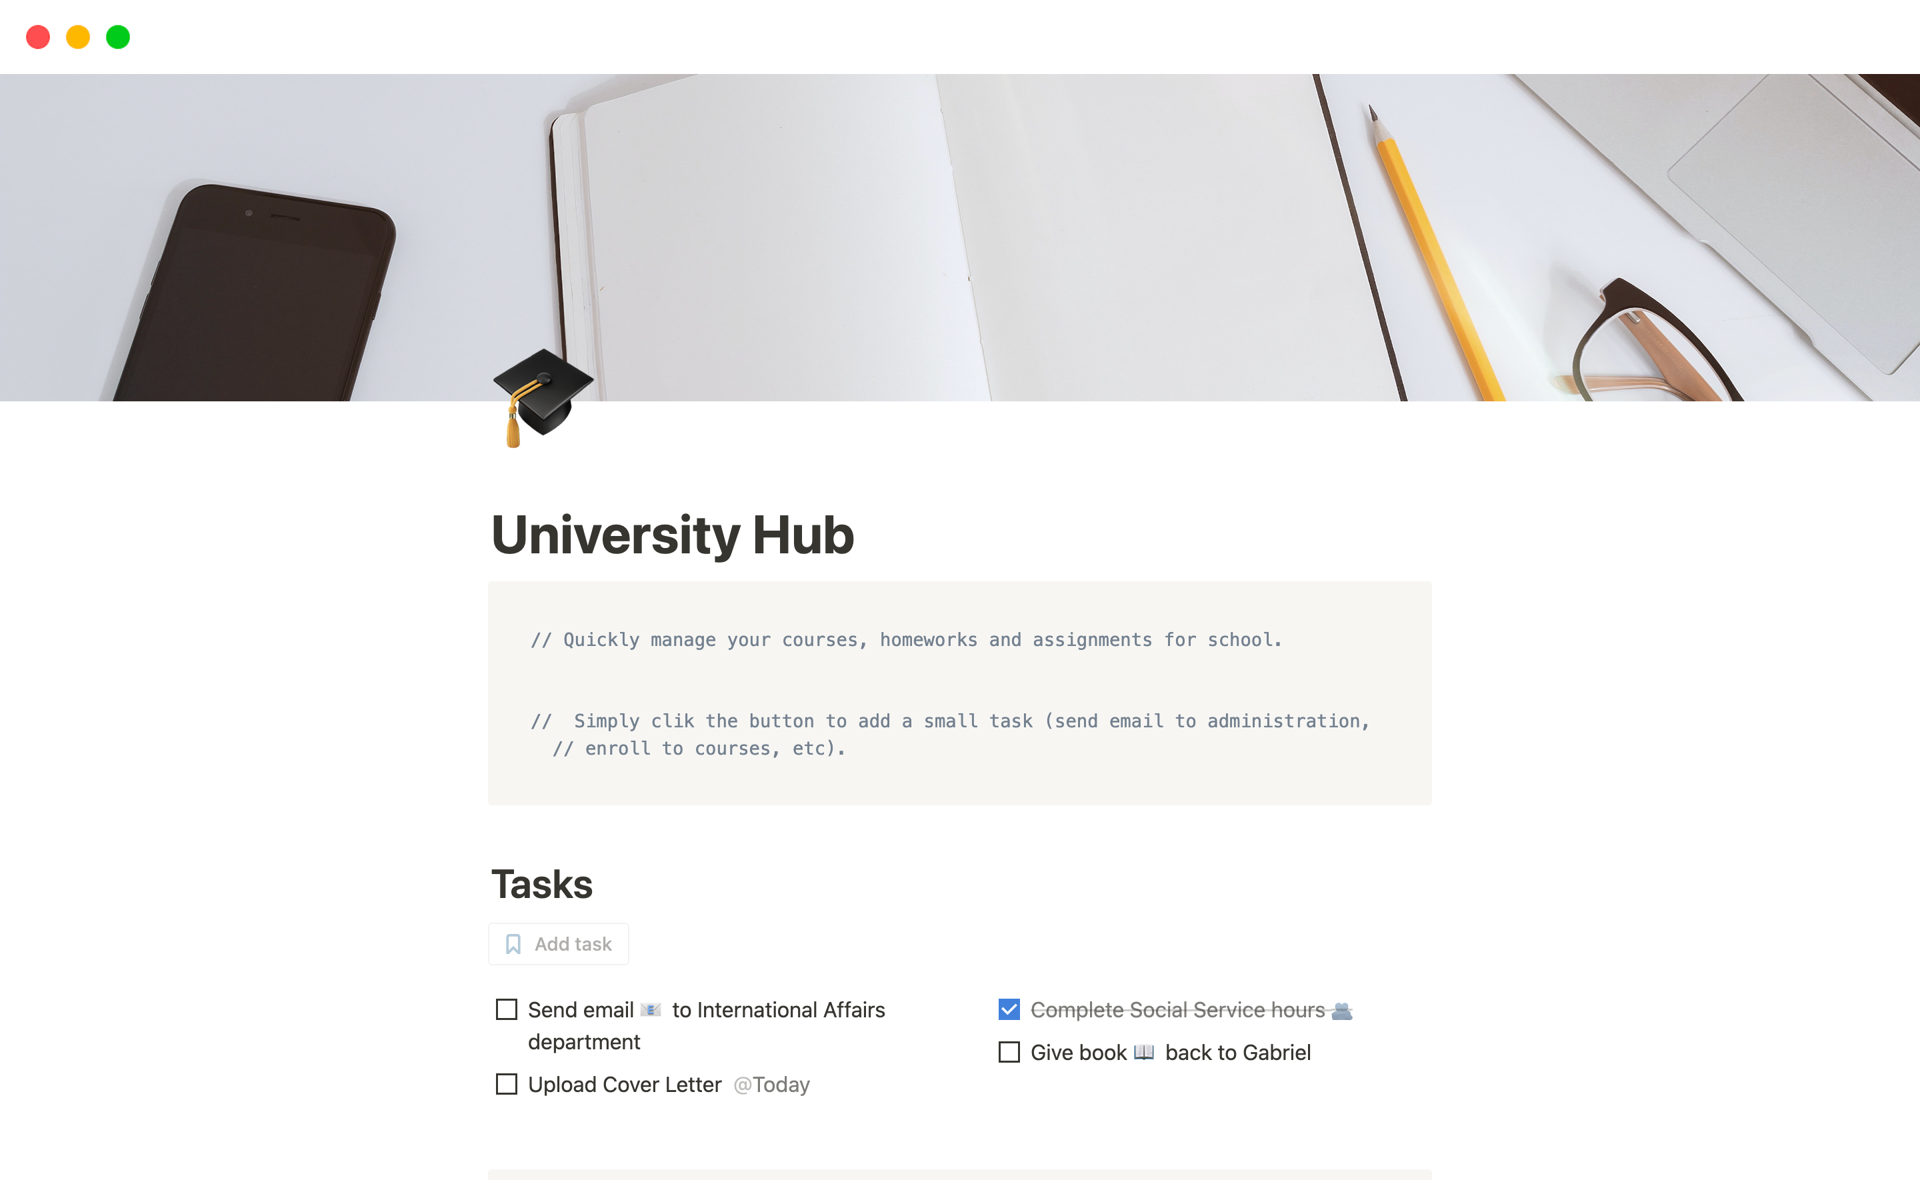 Aperçu du modèle de University Hub